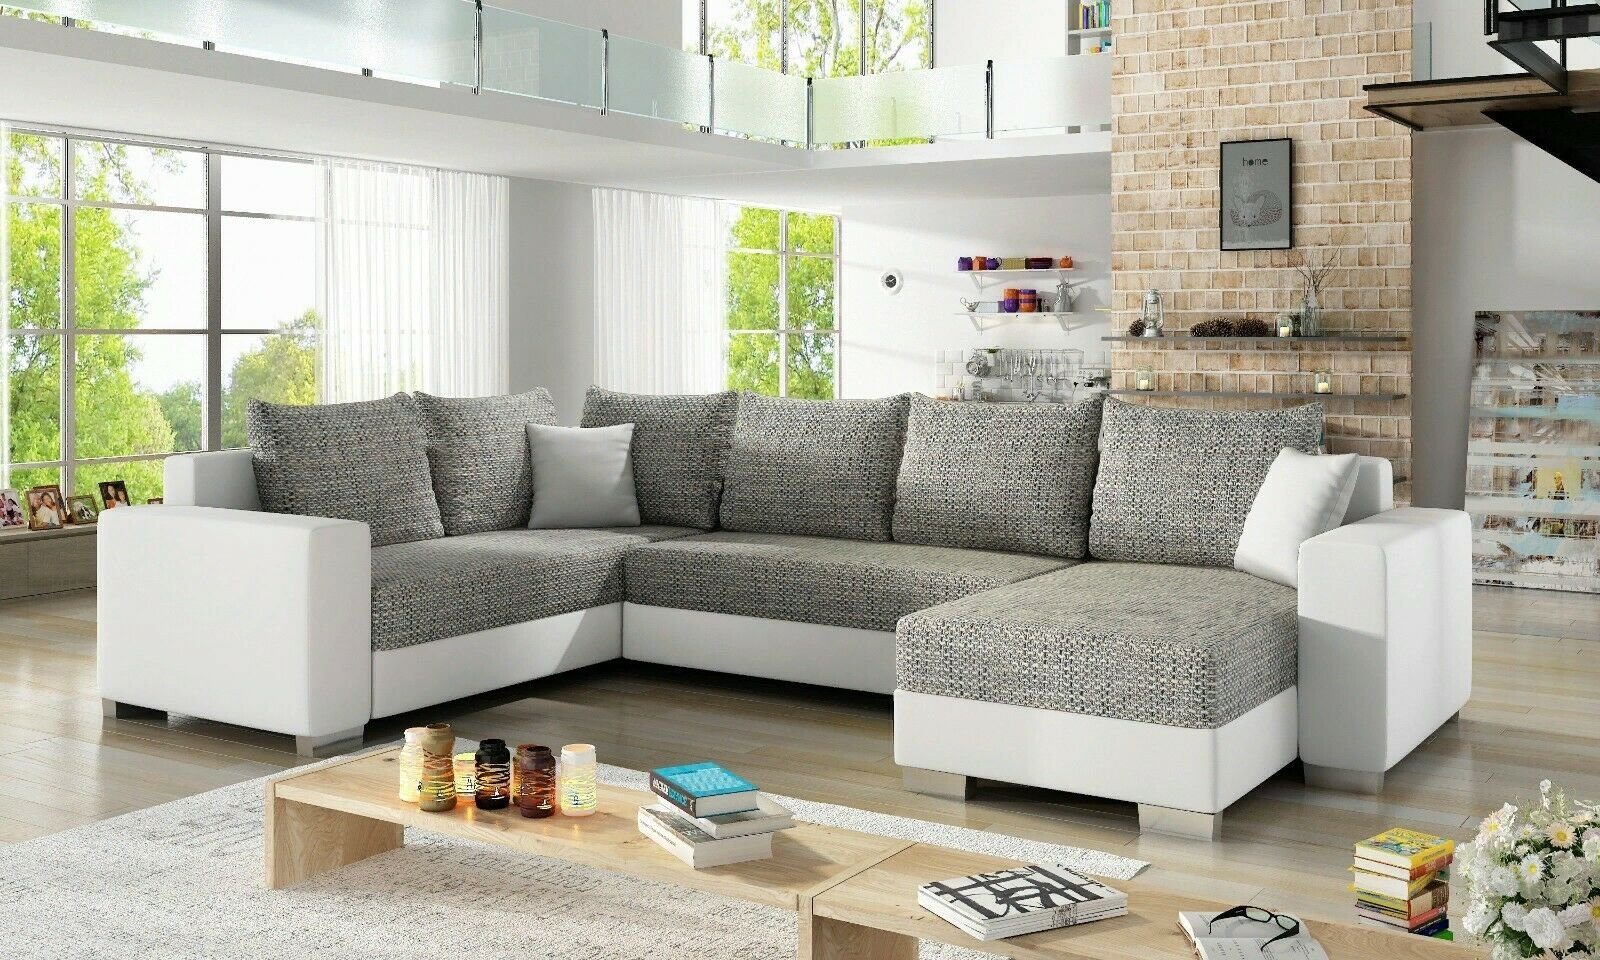 JVmoebel Ecksofa Design Ecksofa Sofa Bettfunktion Mit Couch Bettfunktion Weiß Schlafsofa / Polster Hellgrau Textil